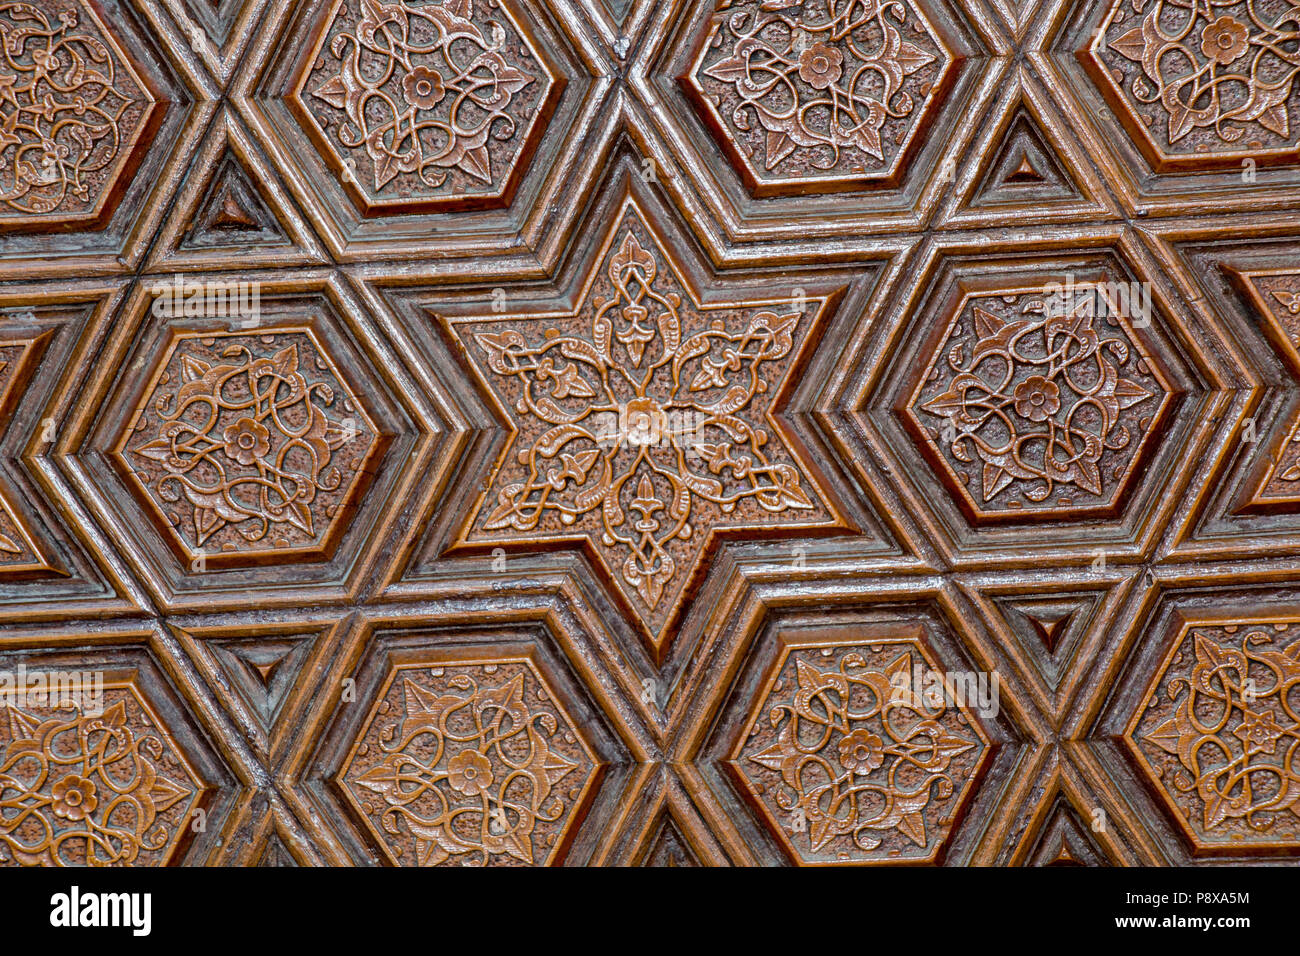 Ottoman Turkish art with geometric patterns on surfaces Stock Photo